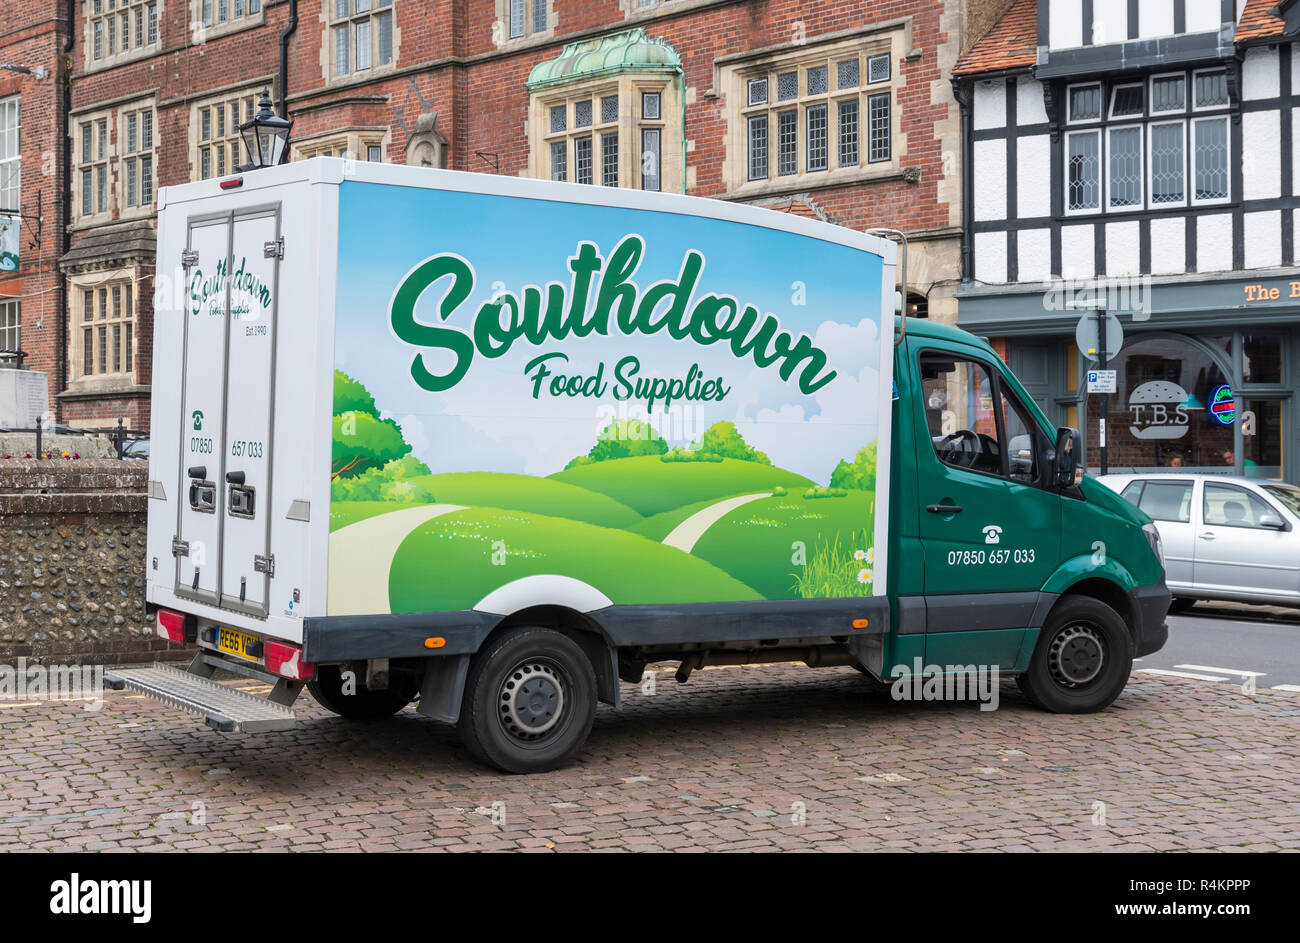 Southdown Food Supplies van parked in Arundel, West Sussex, England, UK. Stock Photo